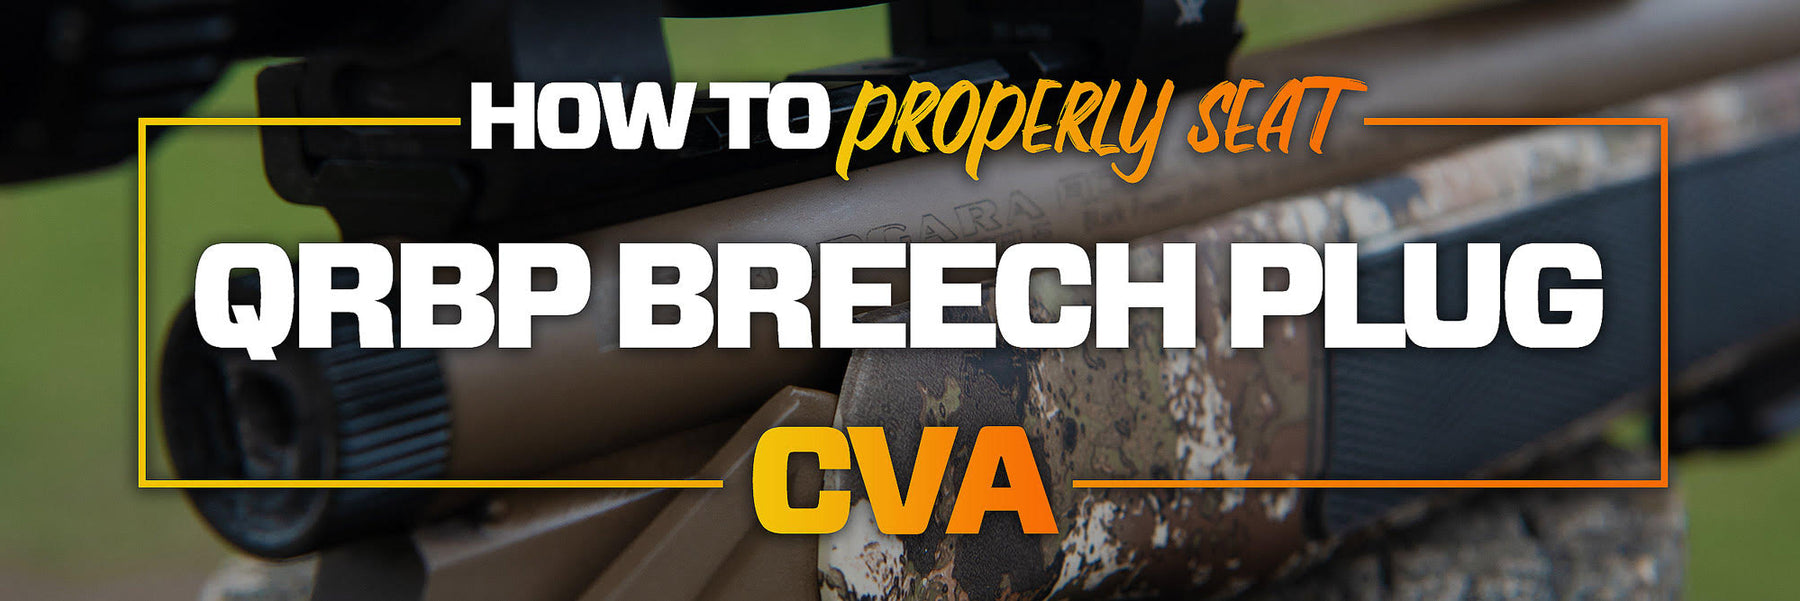 How To Properly Seat a New CVA Breech Plug